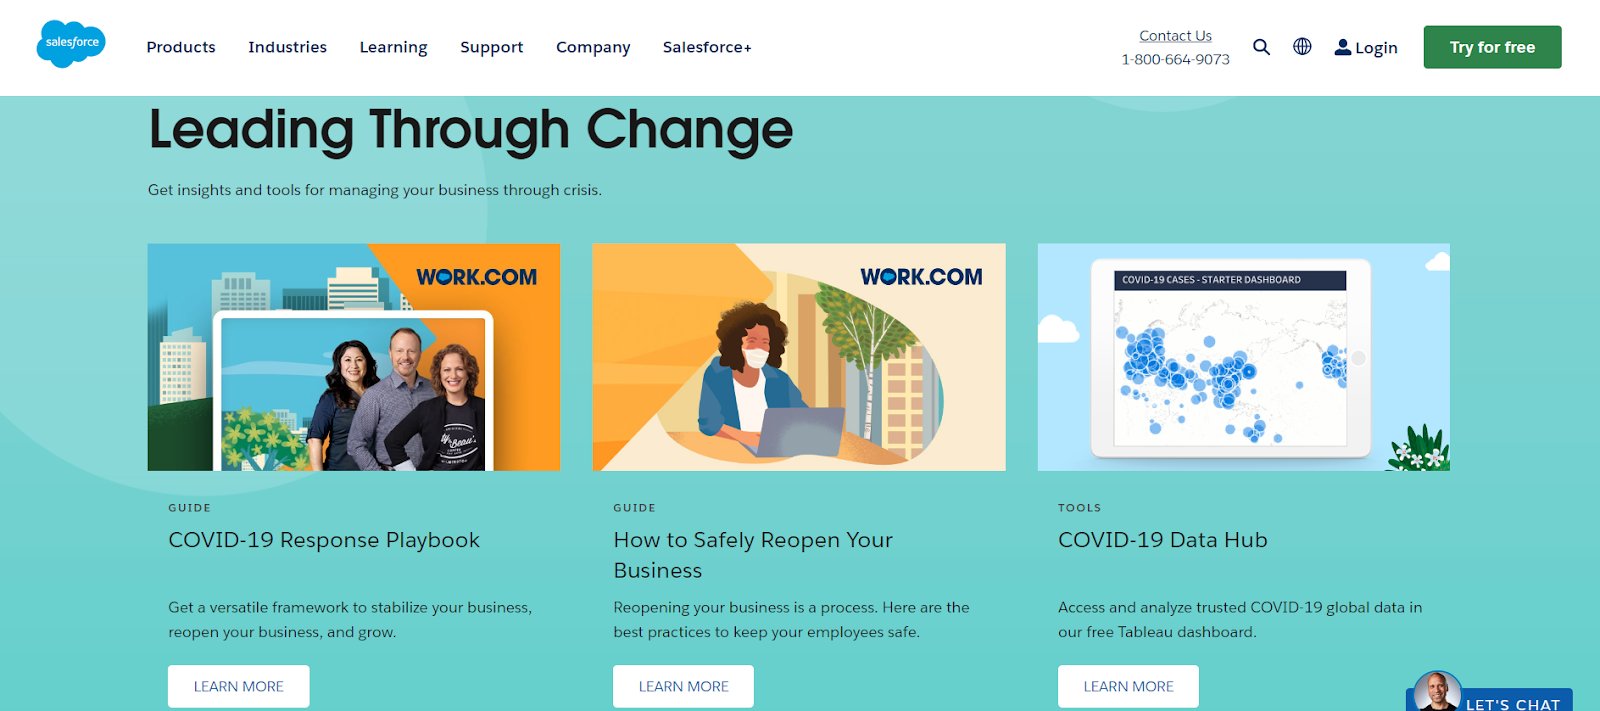 Salesforce's 'Leading Through Change' resource center.